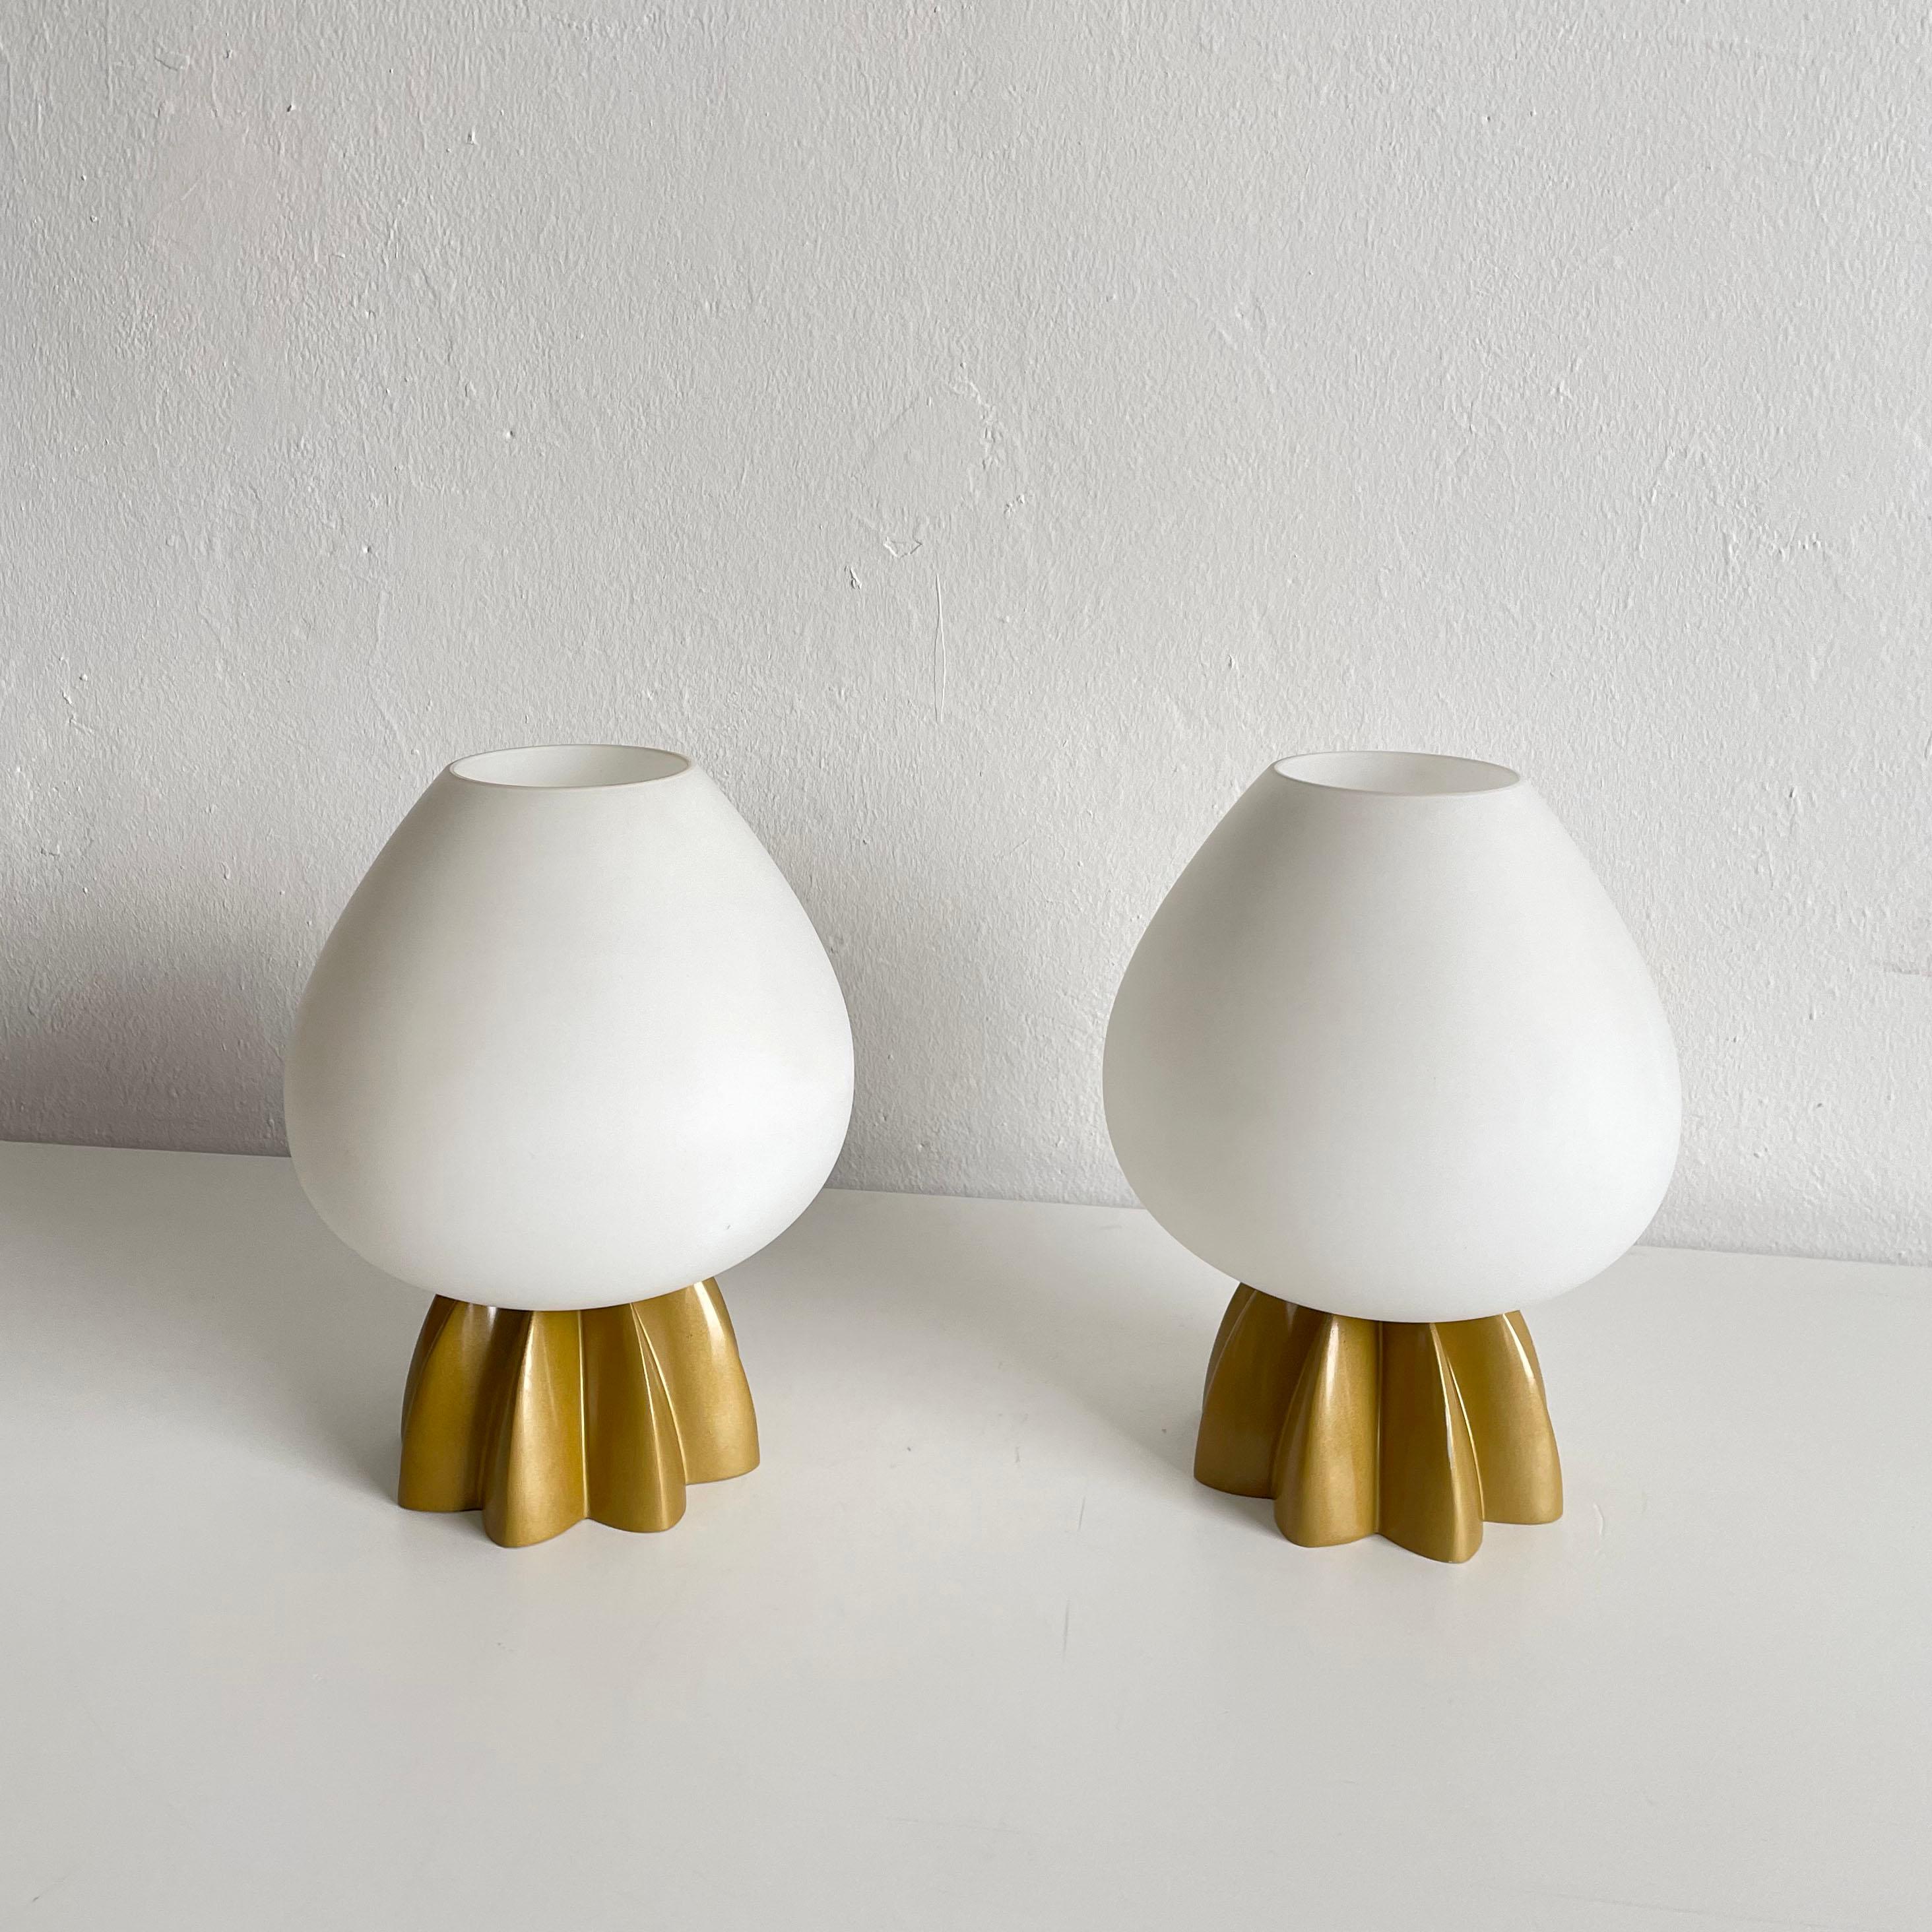 Set of 2 Foscarini Table Lamps, Model Fruits by Rodolfo Dordoni, Italy, 1980s For Sale 7